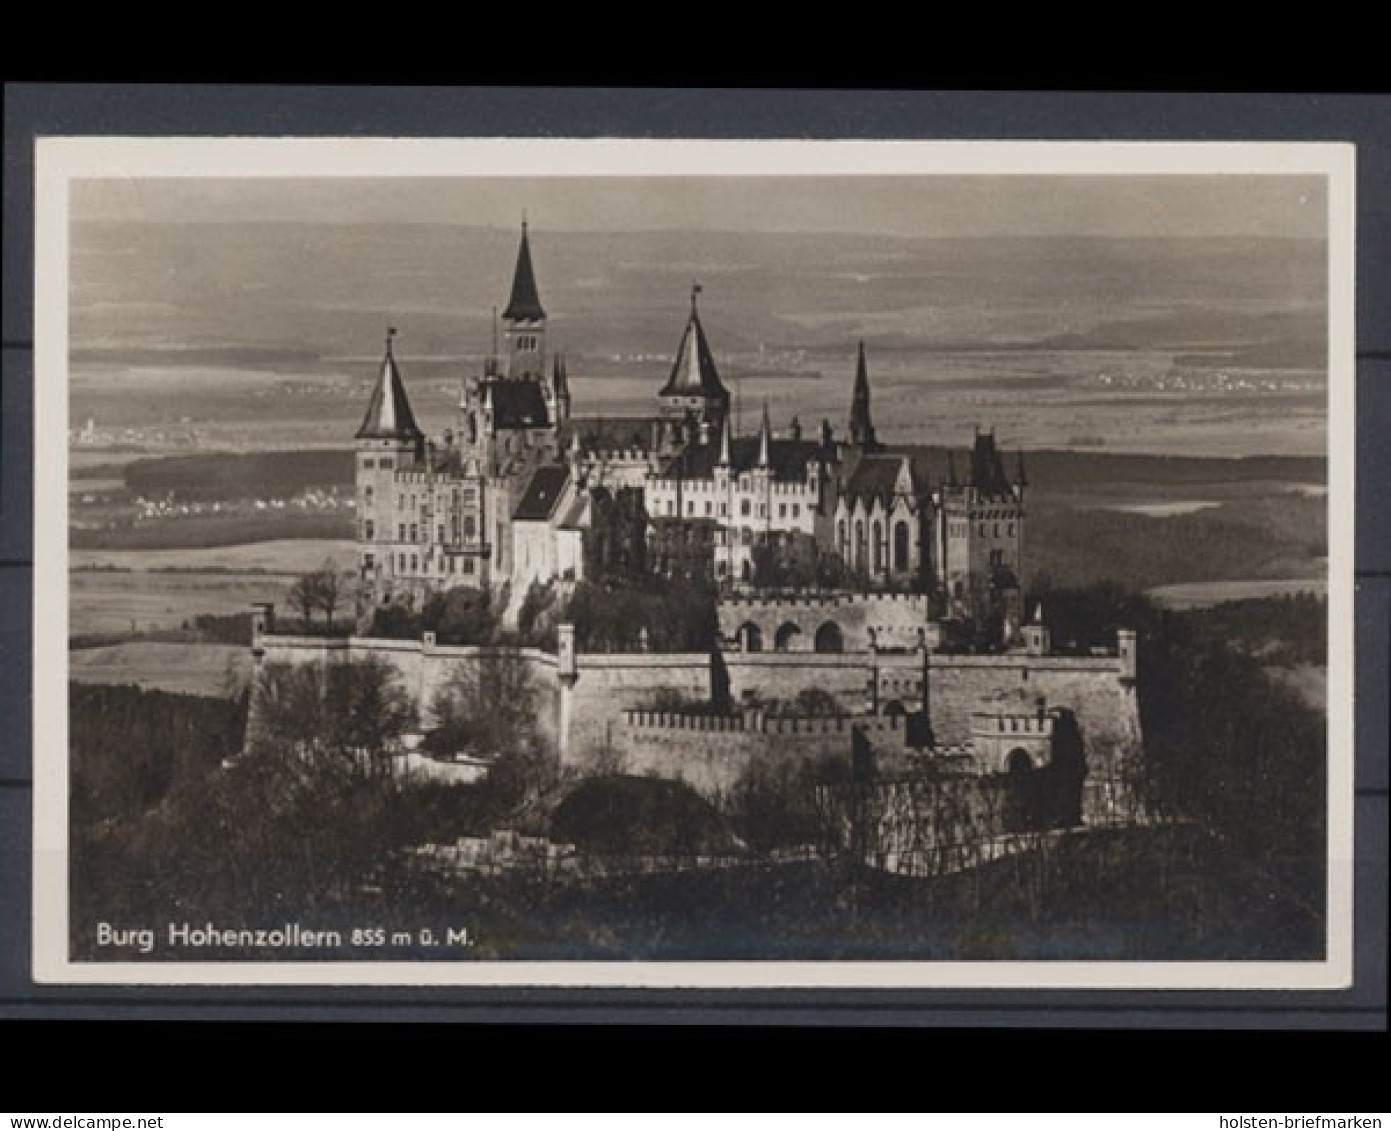 Hechingen, Burg Hohenzollern 855 M. ü. M. - Castles